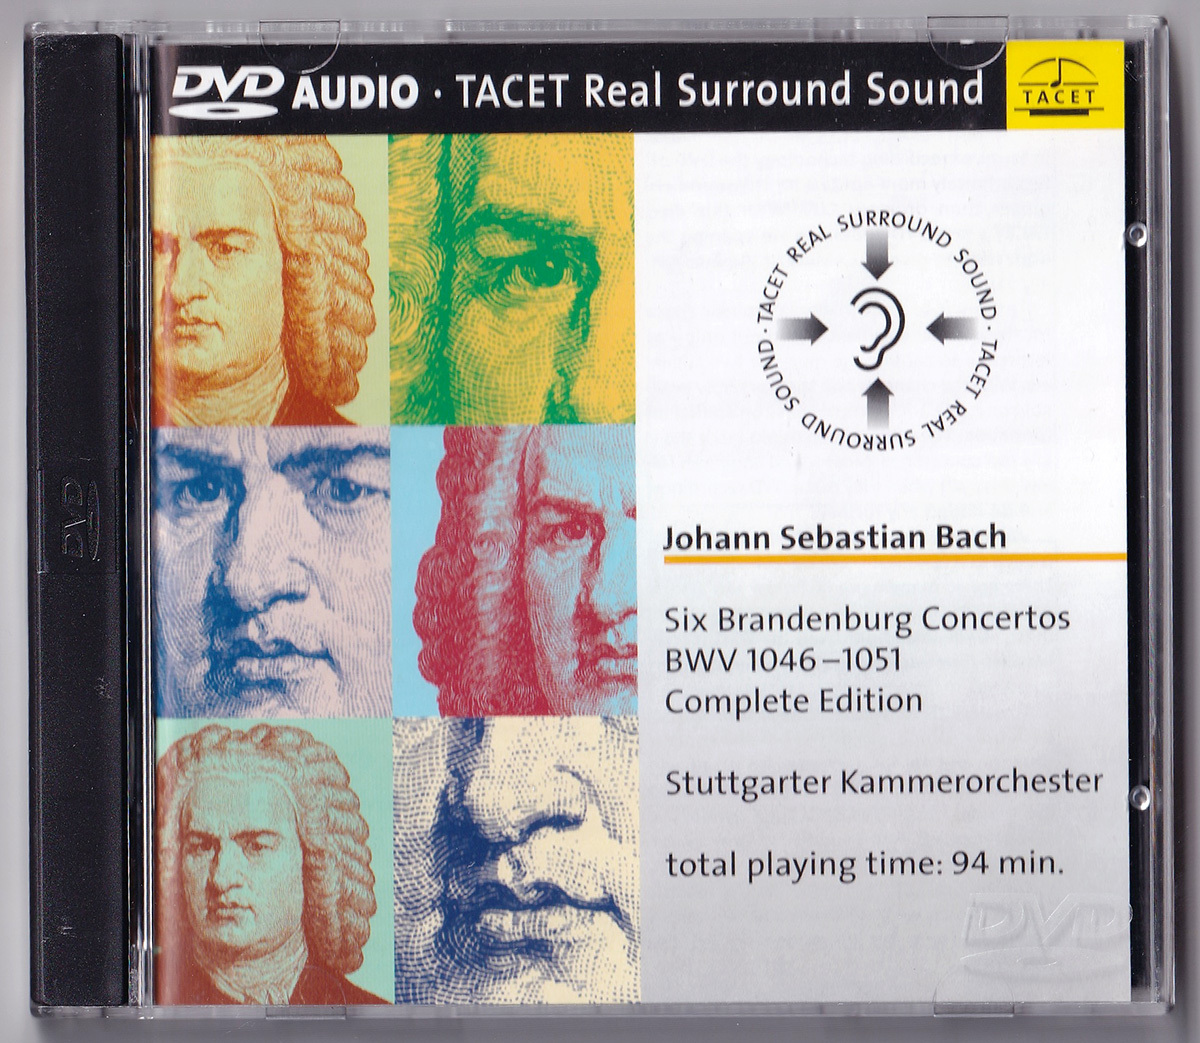 TACET DVD 101 シュツッドガルド室内管弦楽団、バッハ: ブランデンブルグ協奏曲全曲 PCM48k/24bit 4chマルチ DVD AUDIOの画像1